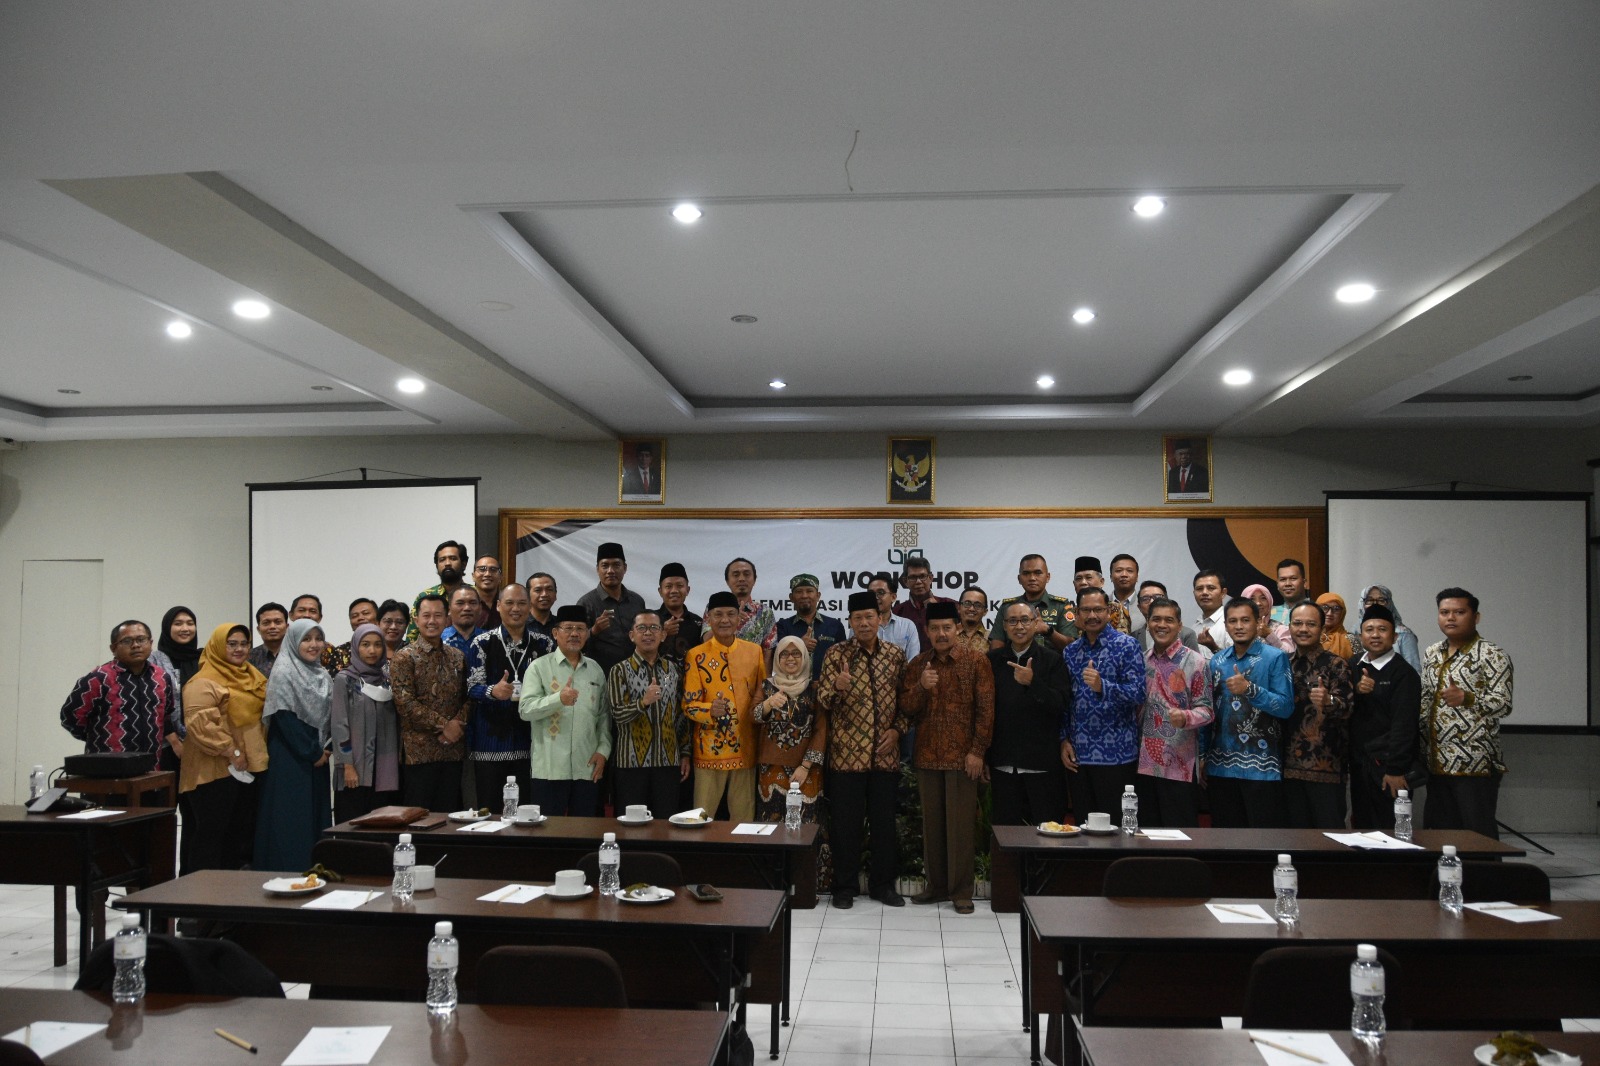 Ketua Pengadilan Negeri Yogyakarta Menghadiri Workshop Implementasi MBKM Fakultas Syari'ah dan Hukum UIN Sunan Kalijaga Yogyakarta